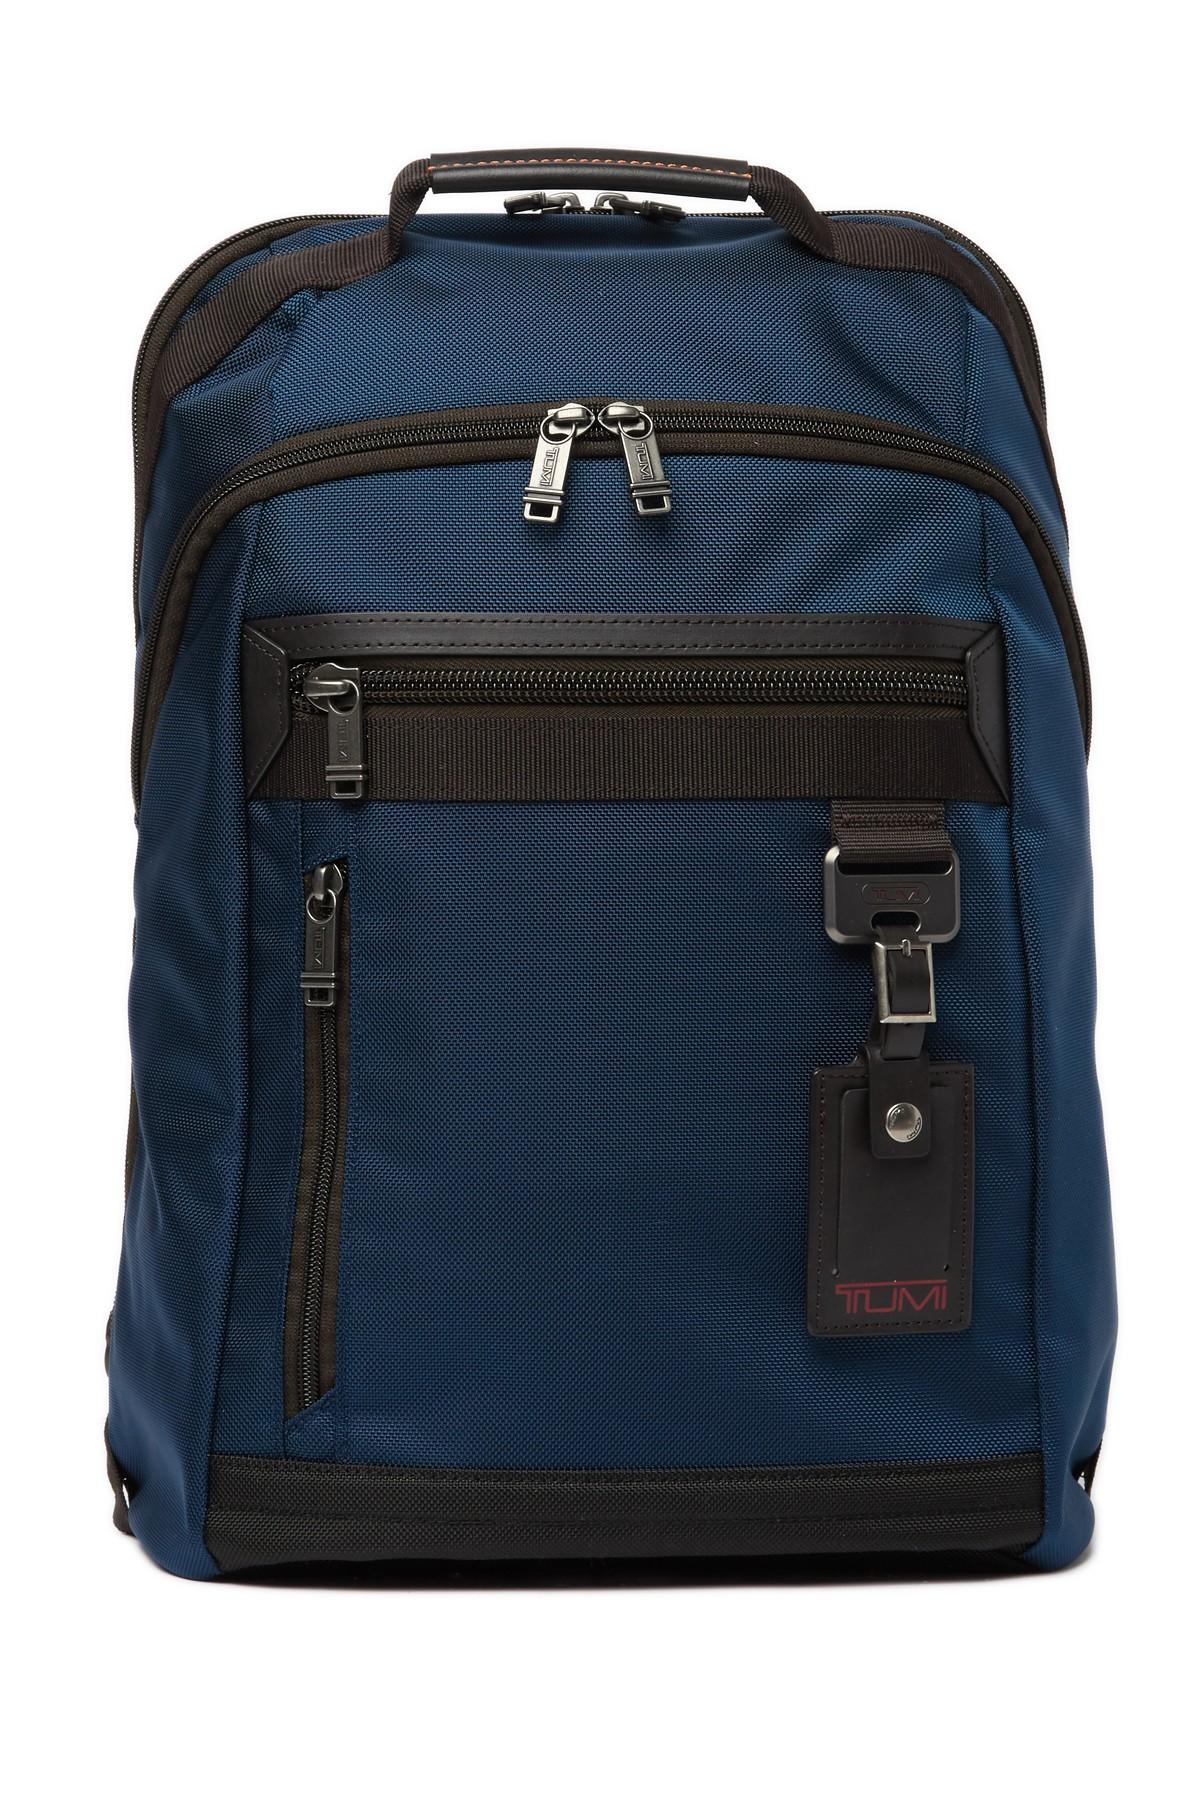 Lyst - Tumi Bertona Backpack in Blue for Men